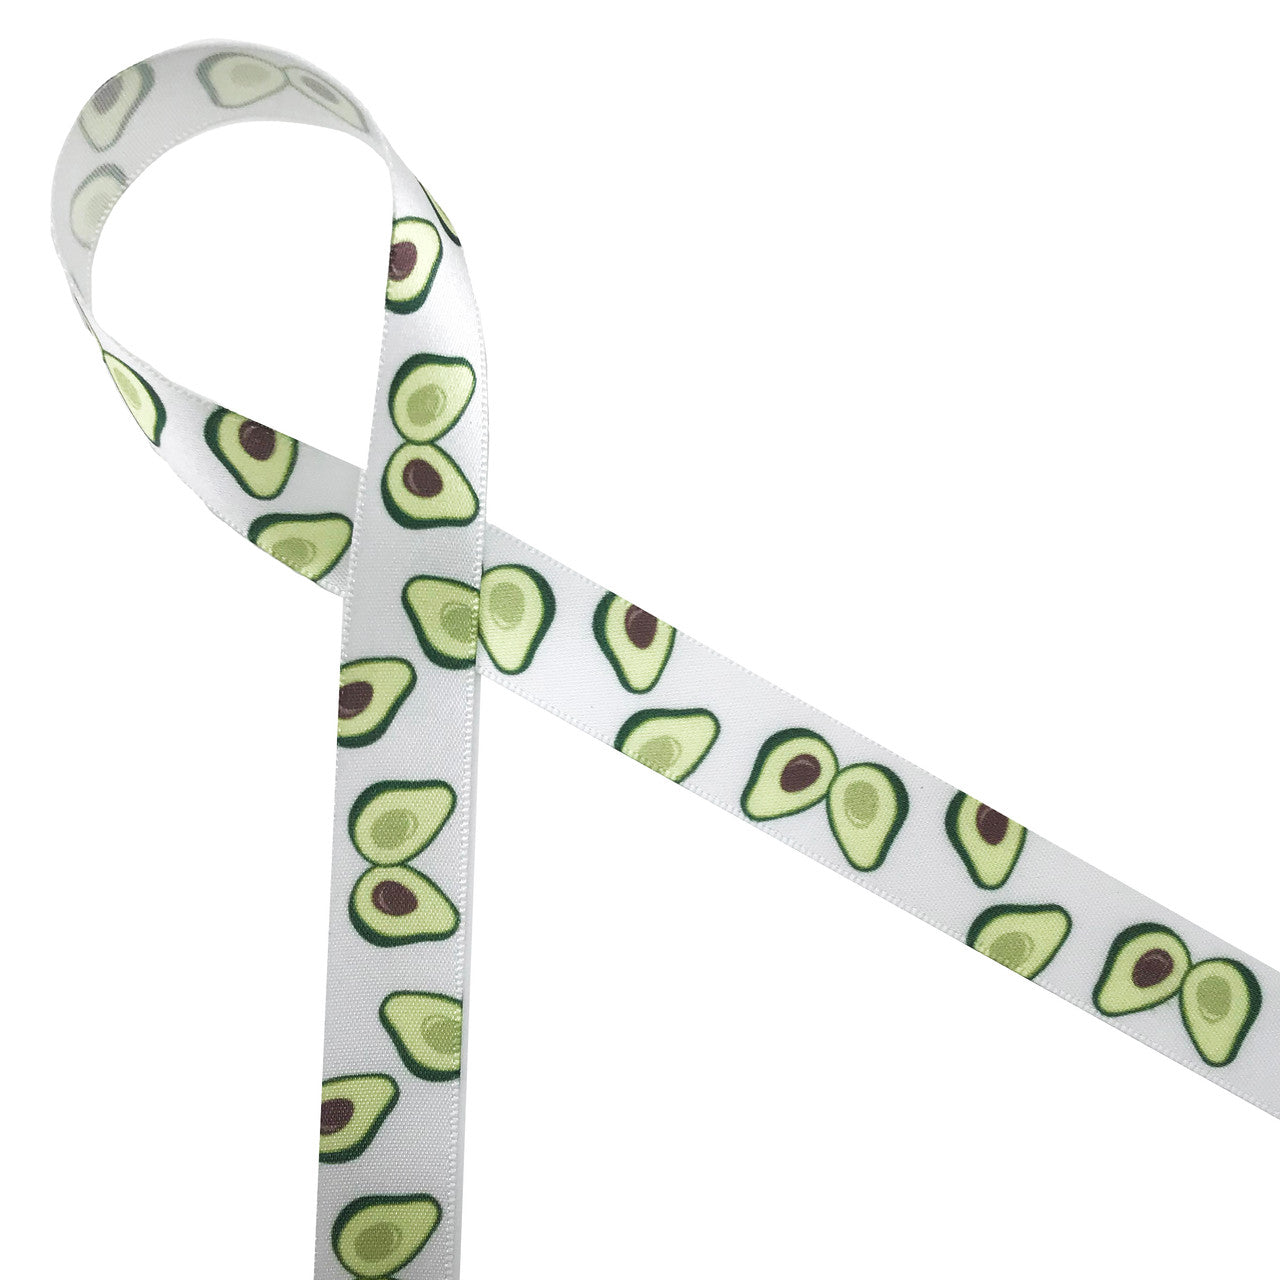 Avocado ribbon with green half avocados printed on 5/8" white single face satin